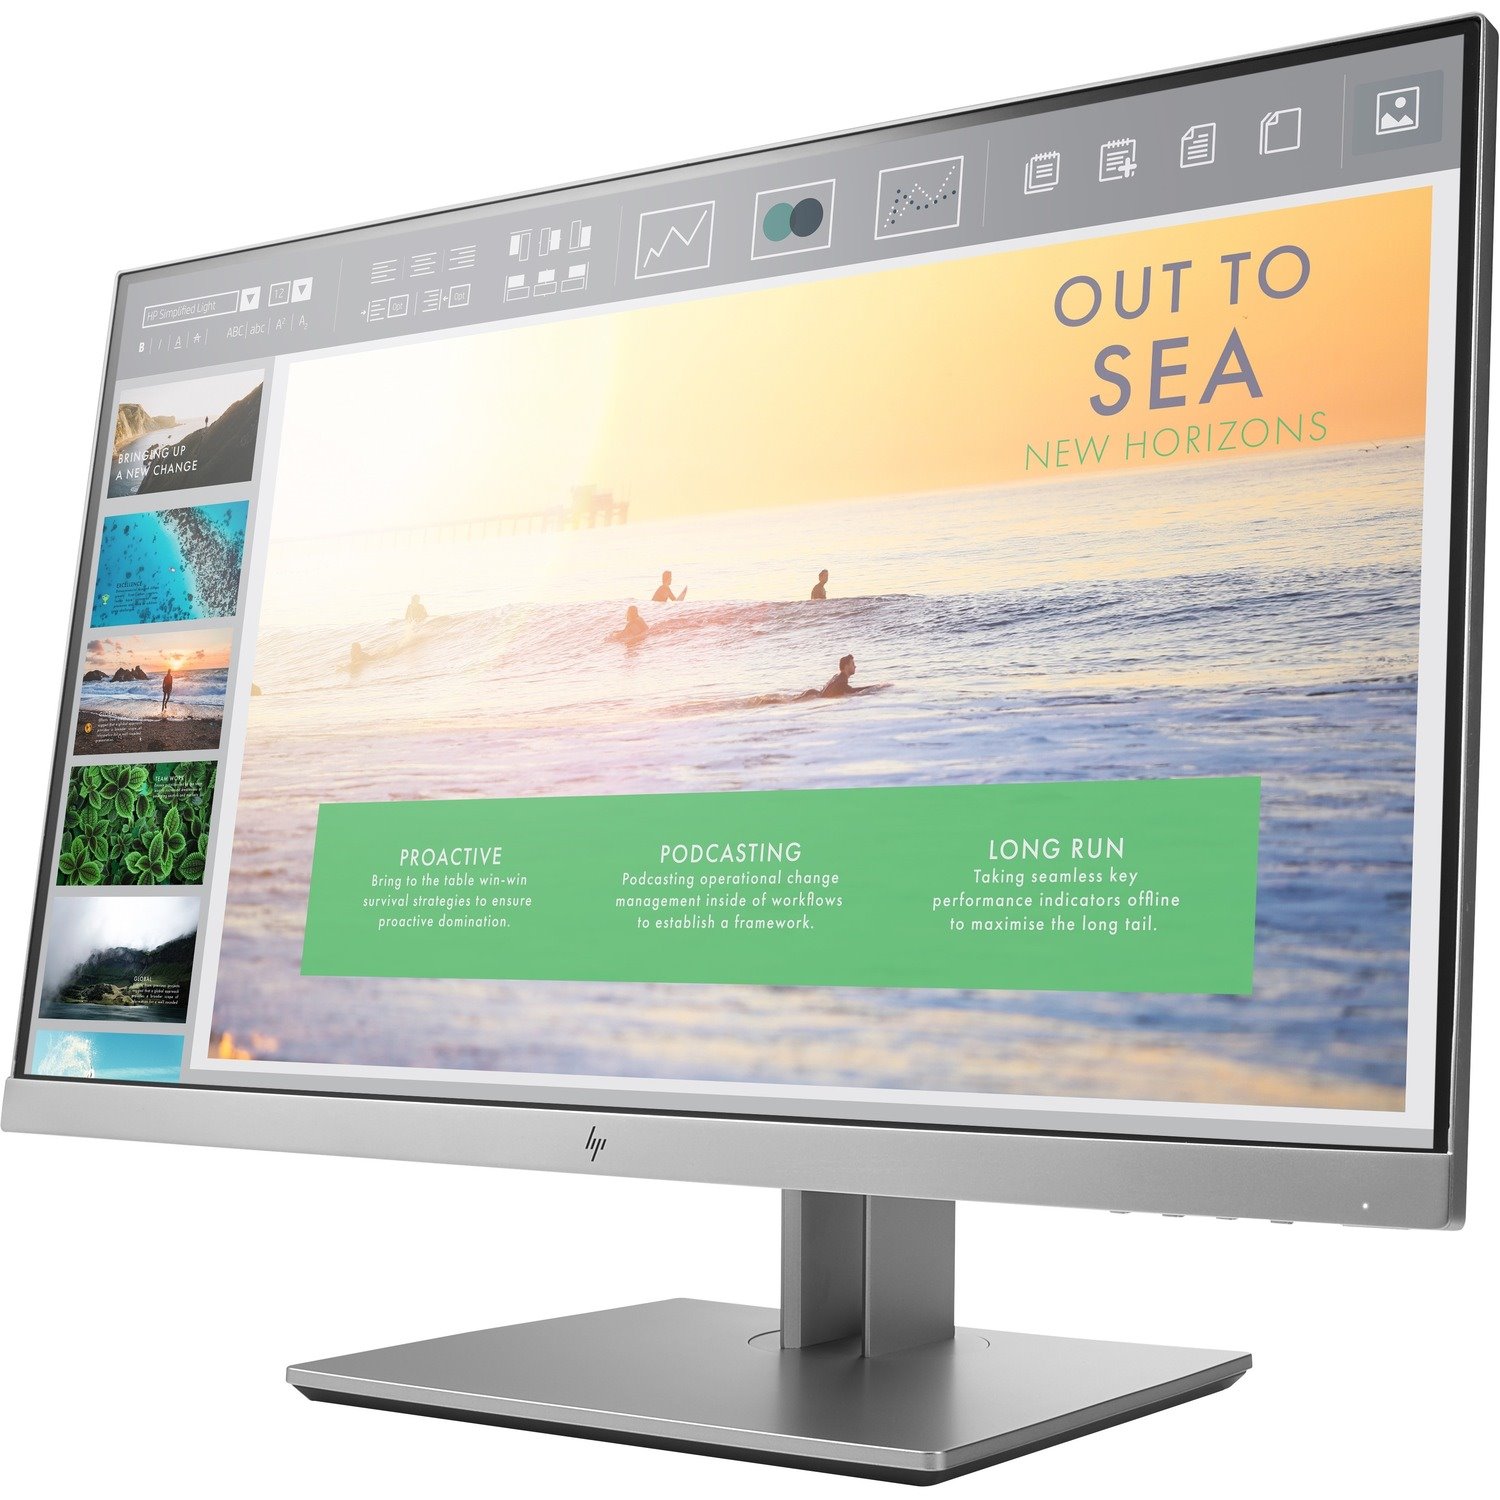 HP Business E233 Full HD LCD Monitor - 16:9